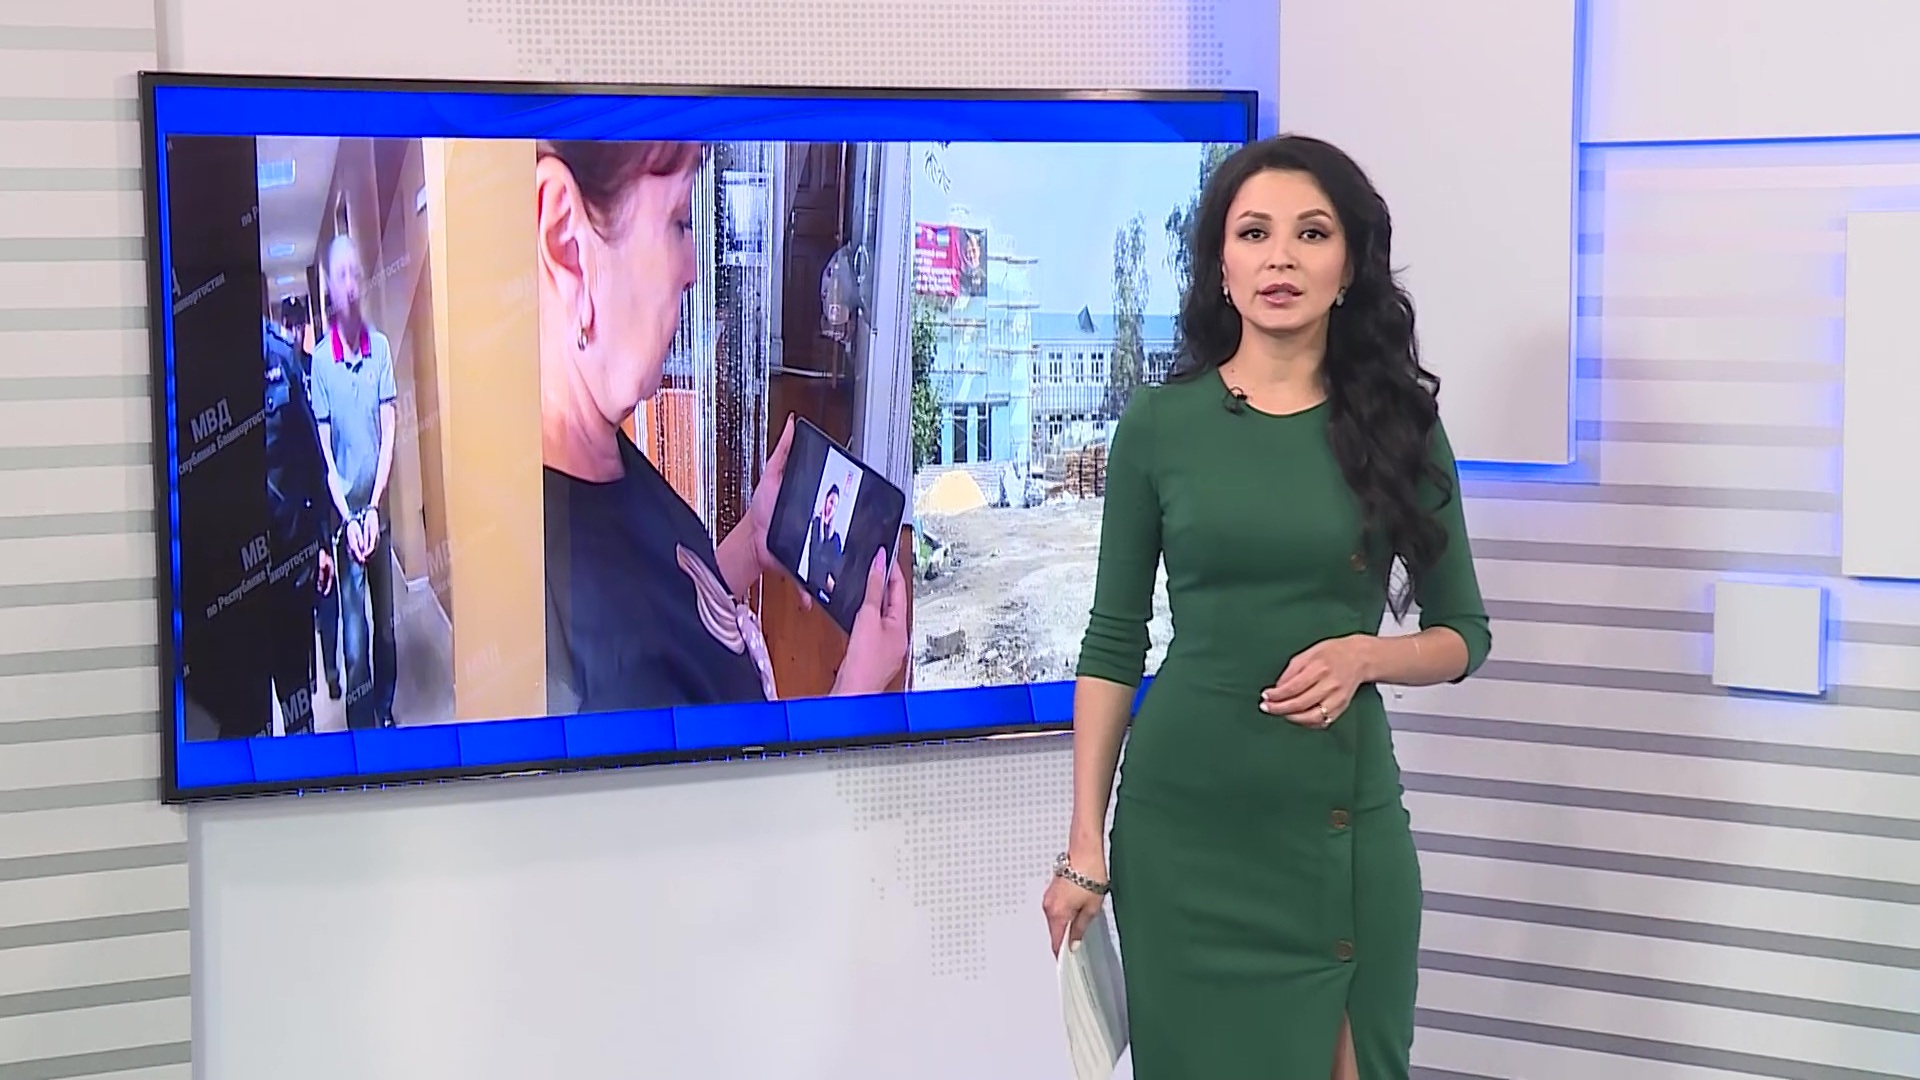 Вести 24 на канале россия 1